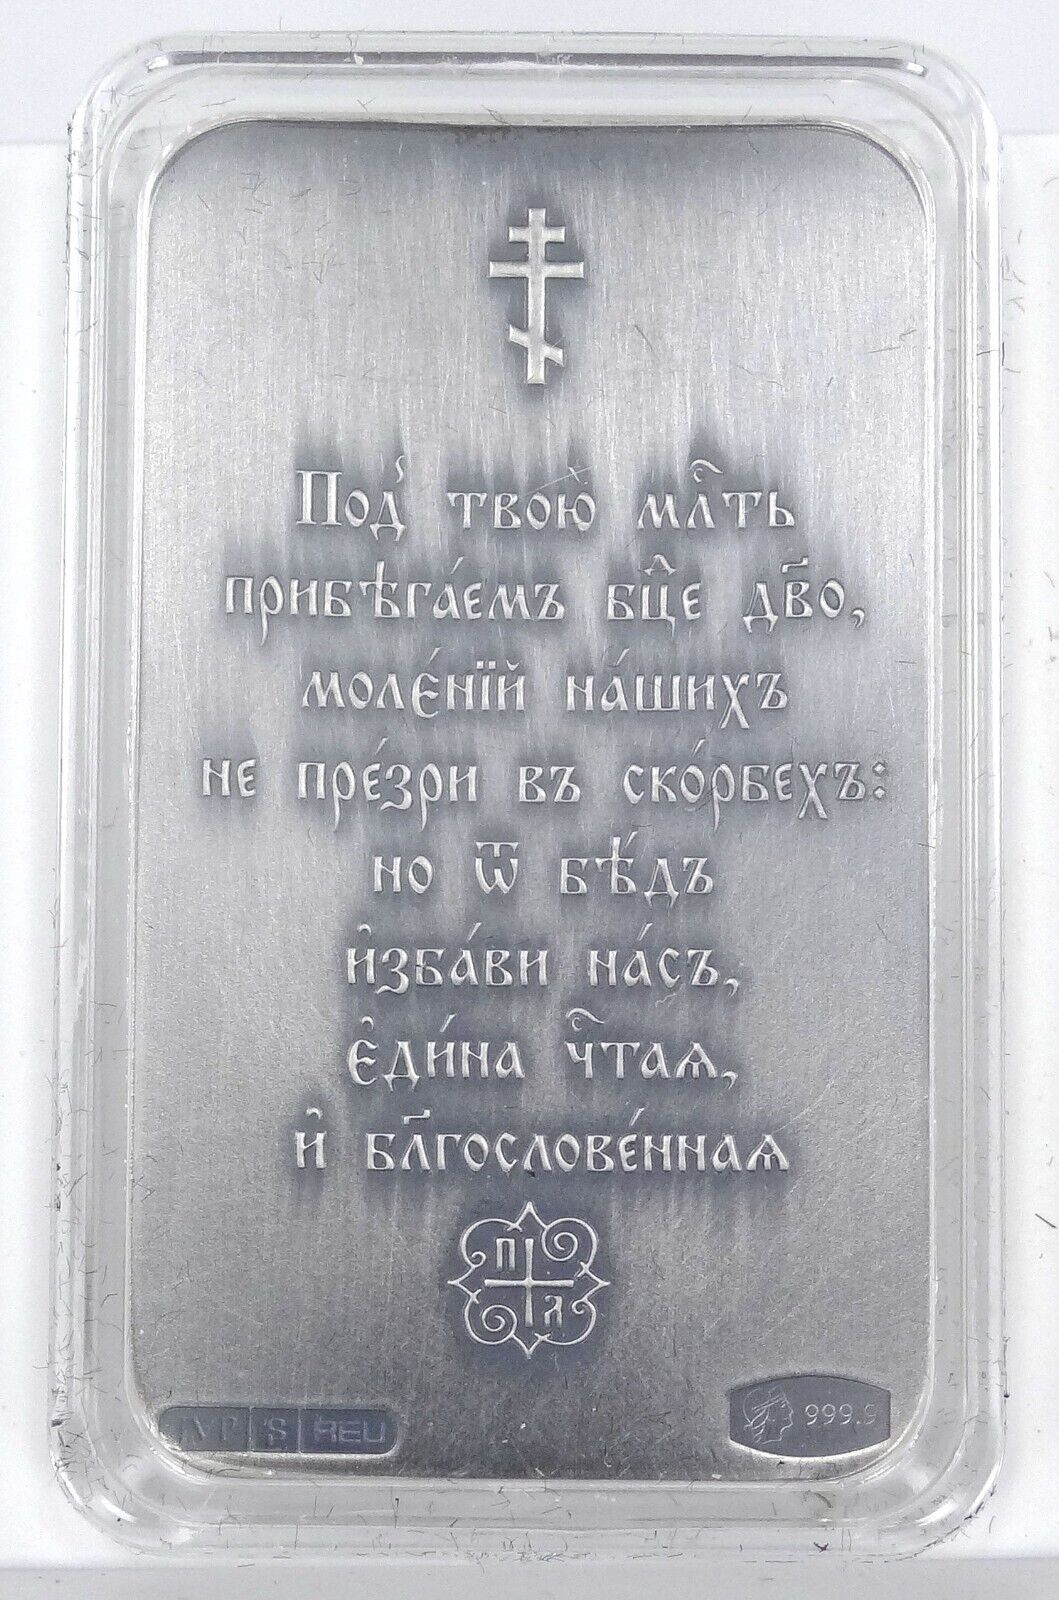 1 Oz Silver Coin Orthodox Icon of the Mother of God Pochaevskaya - Antique